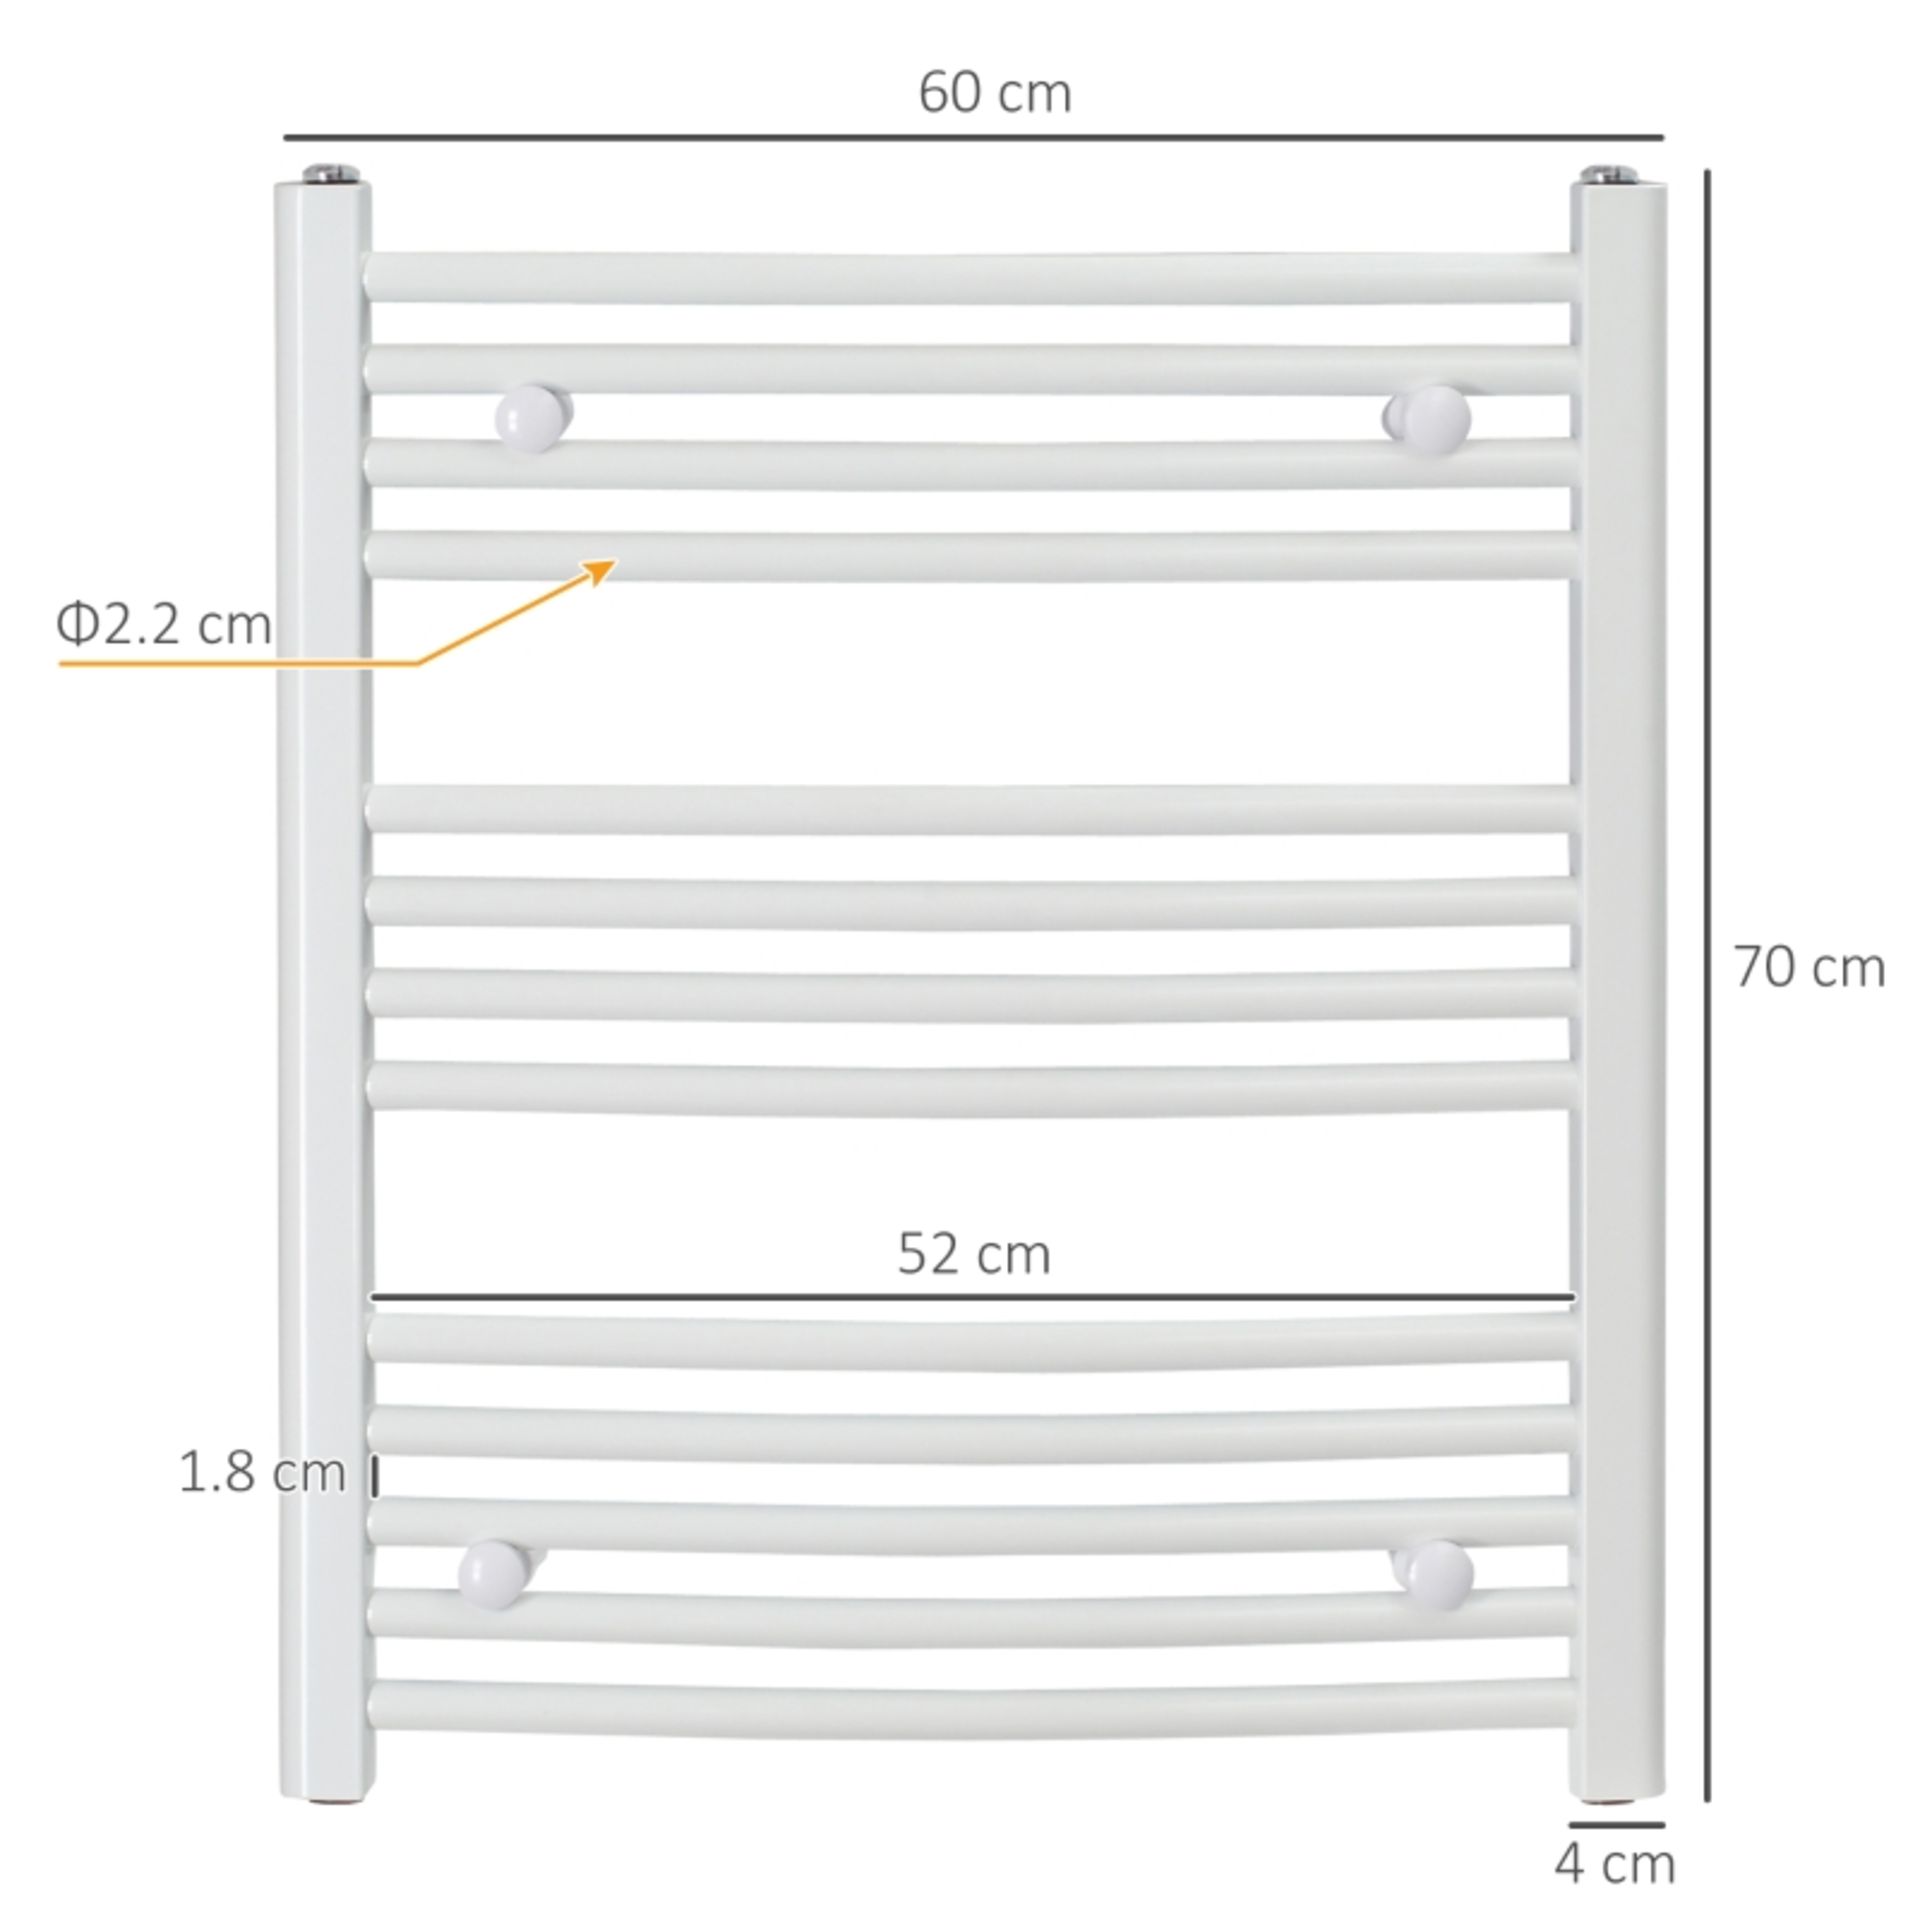 RPP £79.99 -HOMCOM Curved Heated Towel Rail, Hydronic Bathroom Ladder Radiator Towel Warmer For - Image 3 of 4